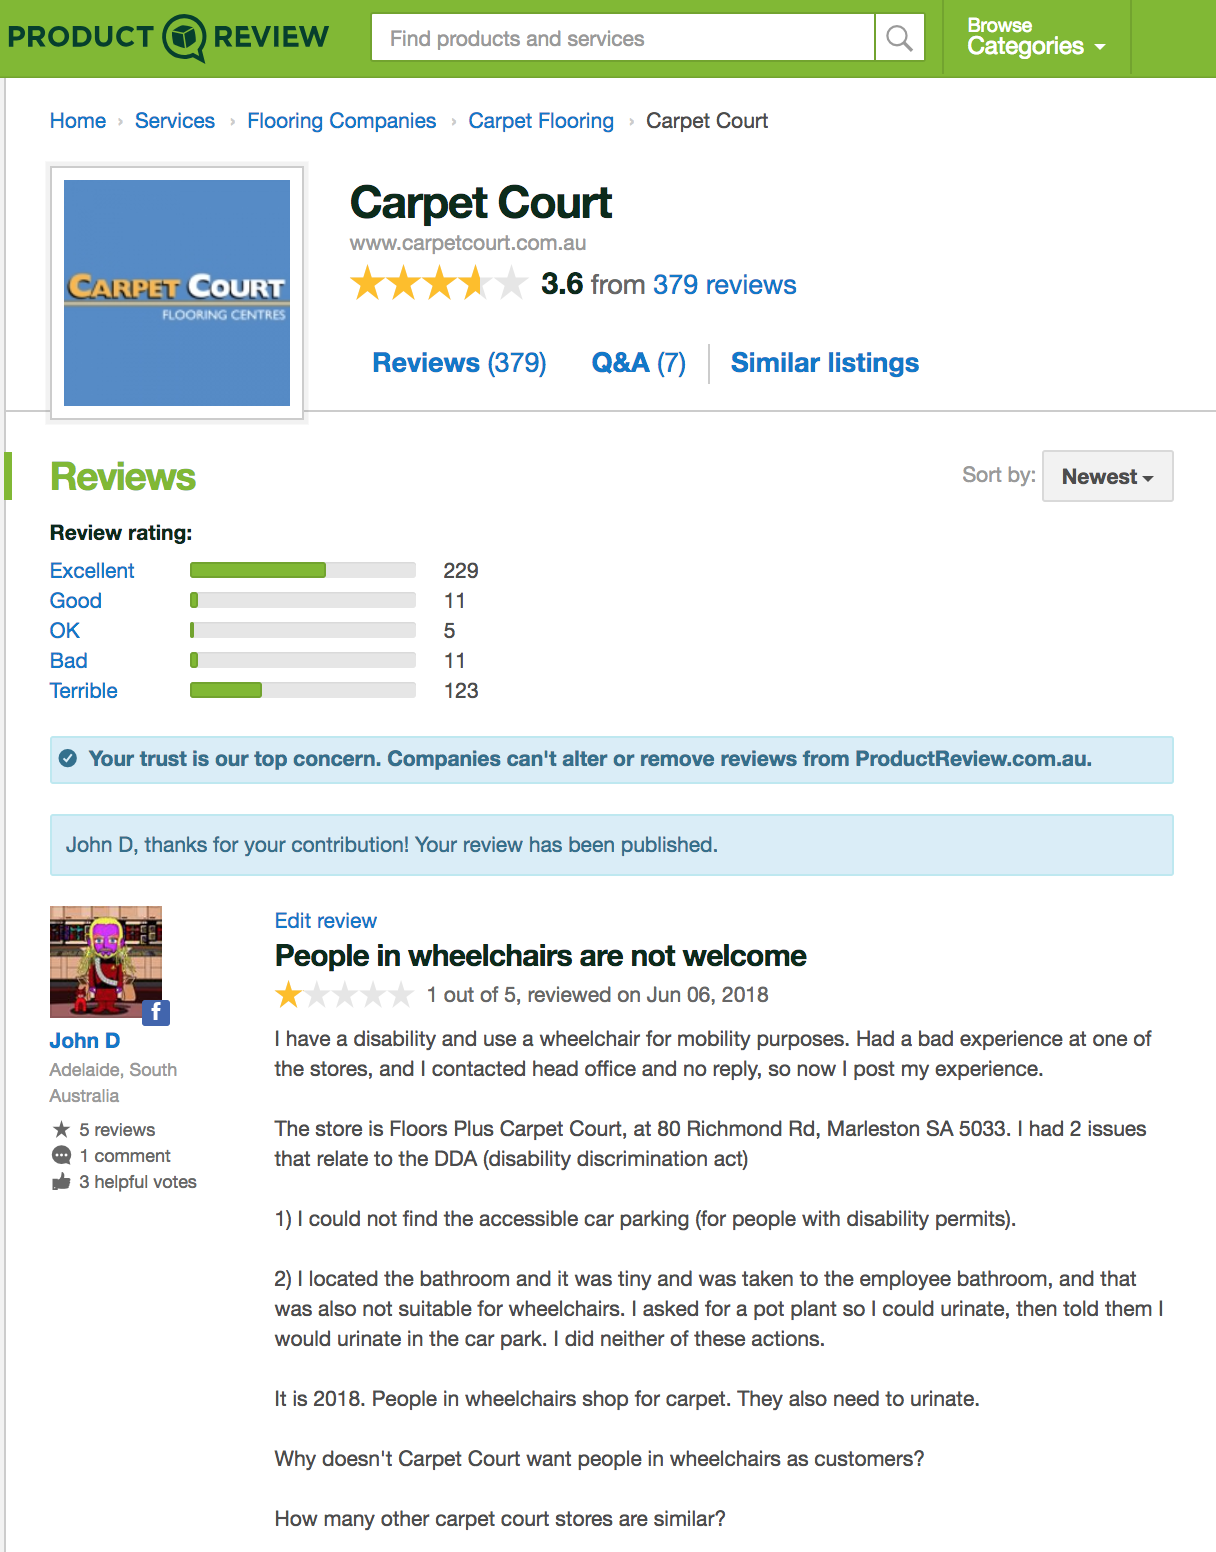 the carpet court review at productreview.com.au